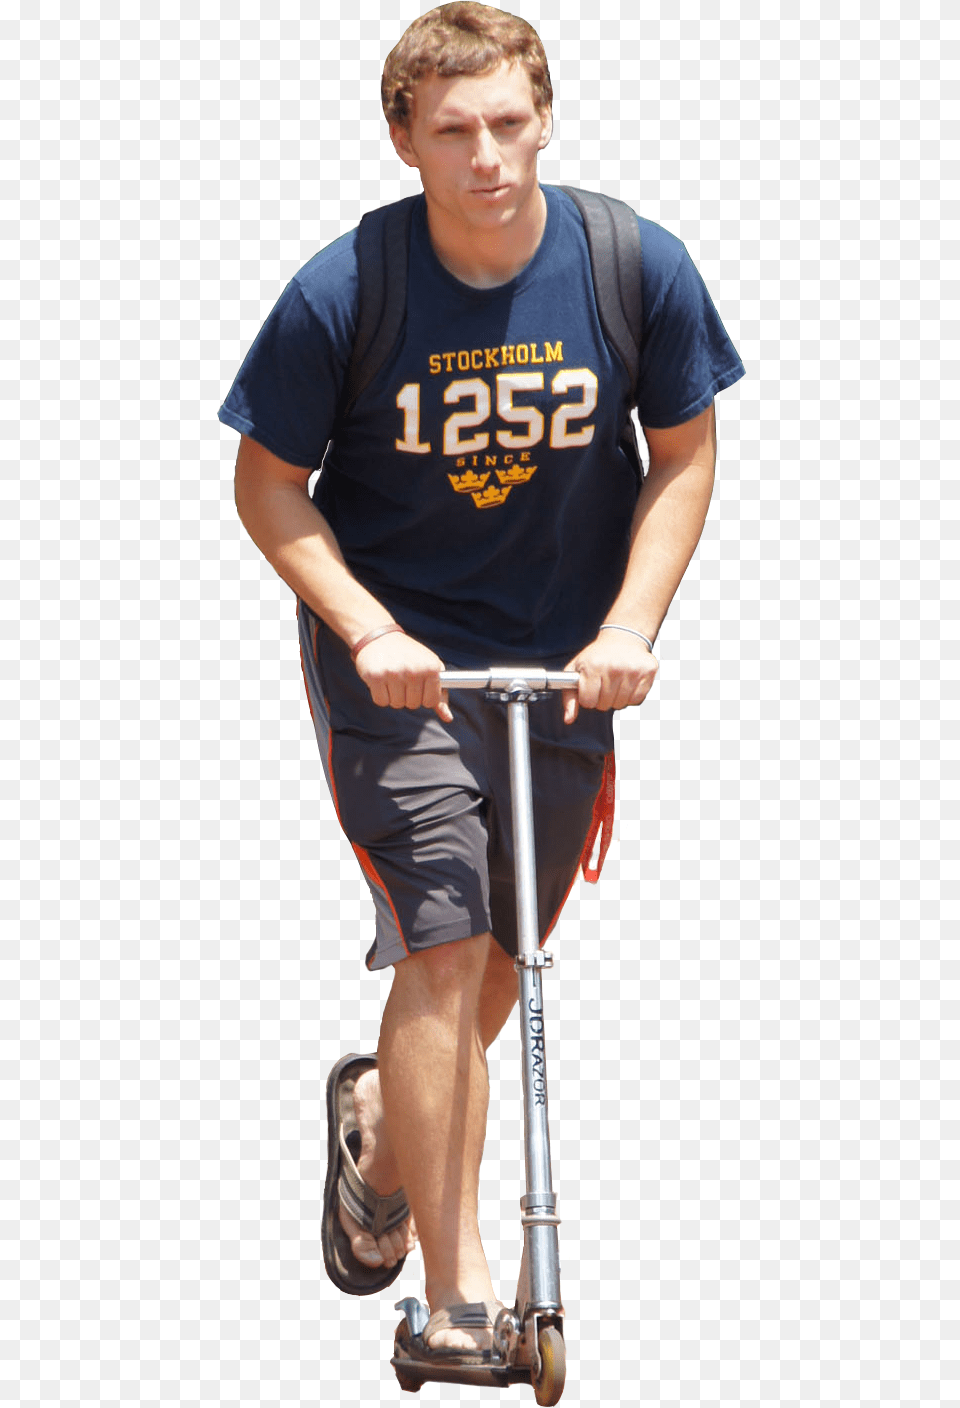 College Students Walking, Vehicle, Clothing, Transportation, T-shirt Png Image